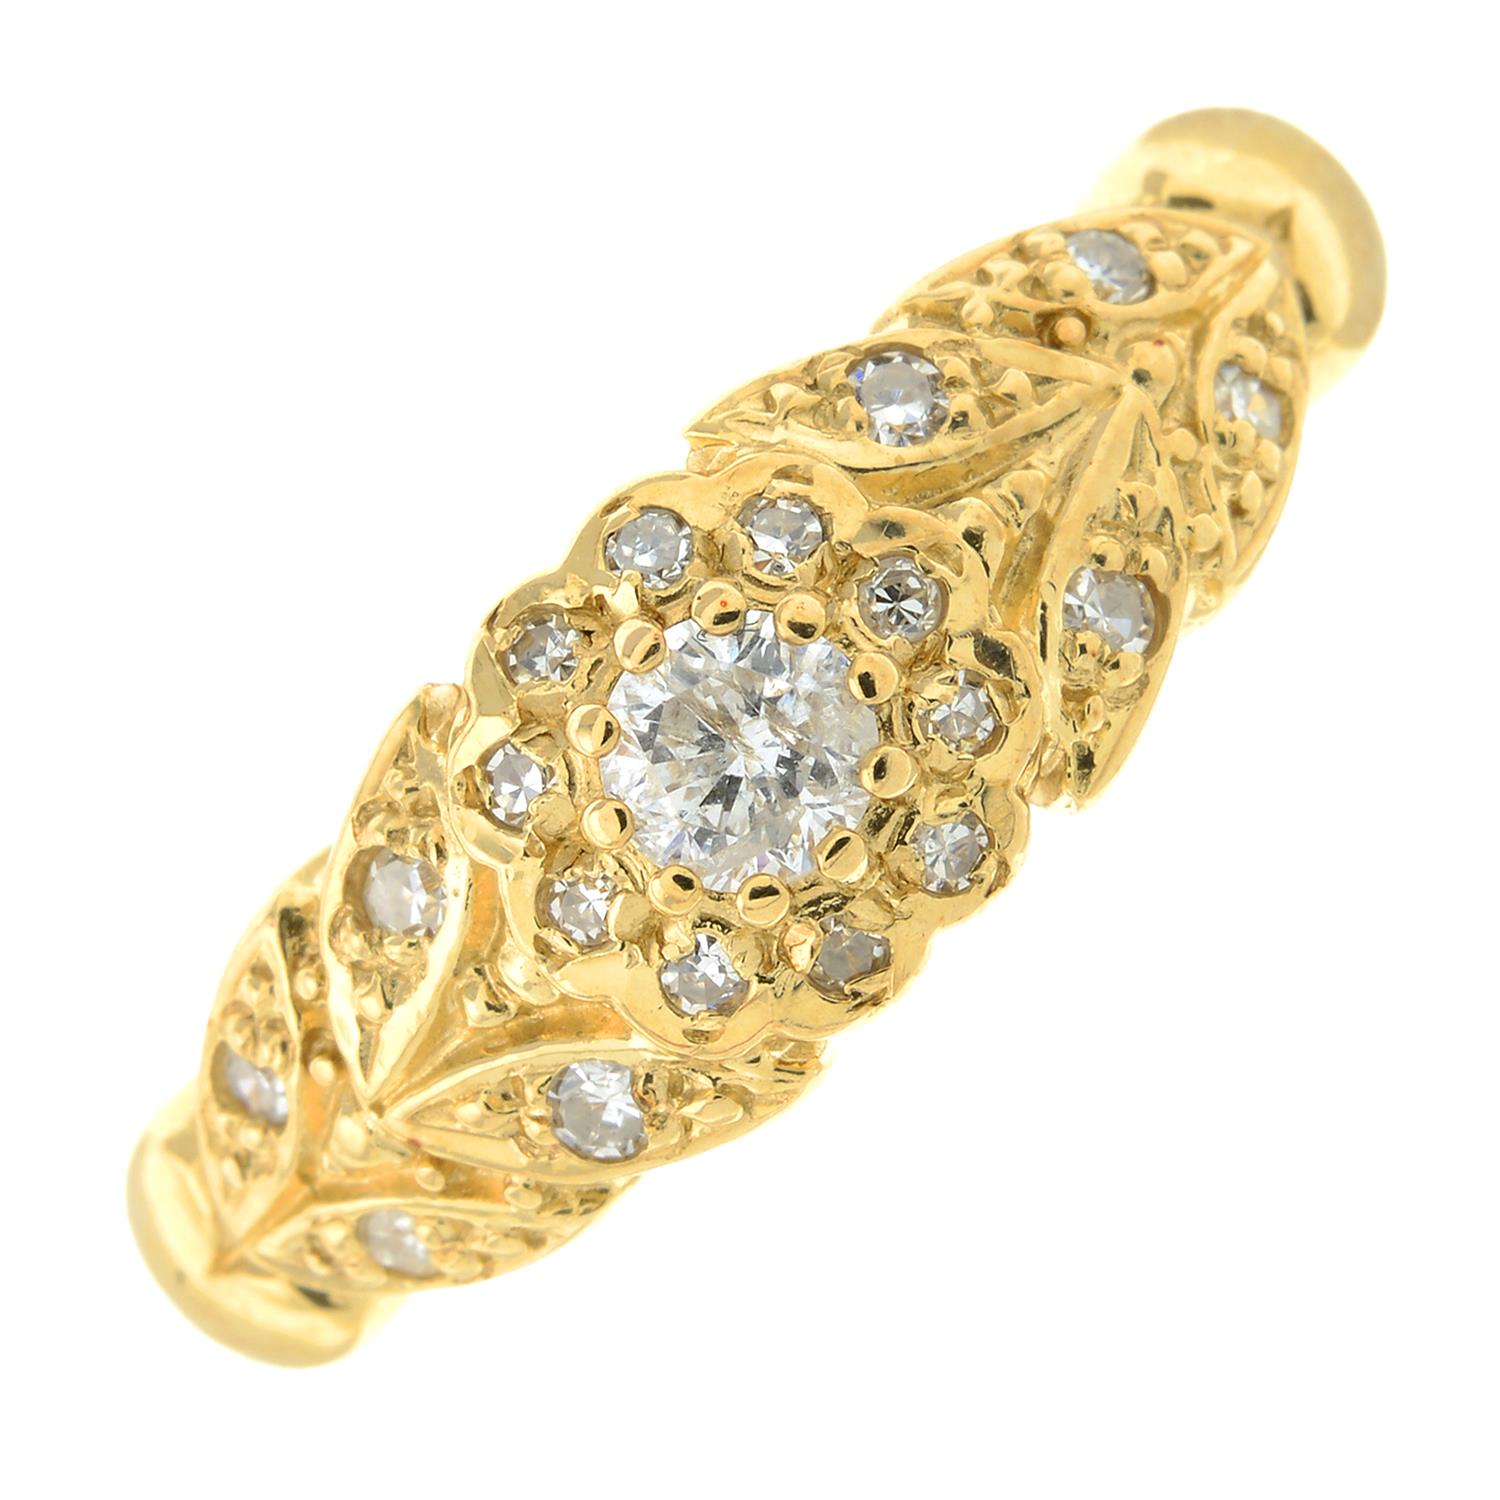 A 14ct gold vari-cut diamond foliate band ring.